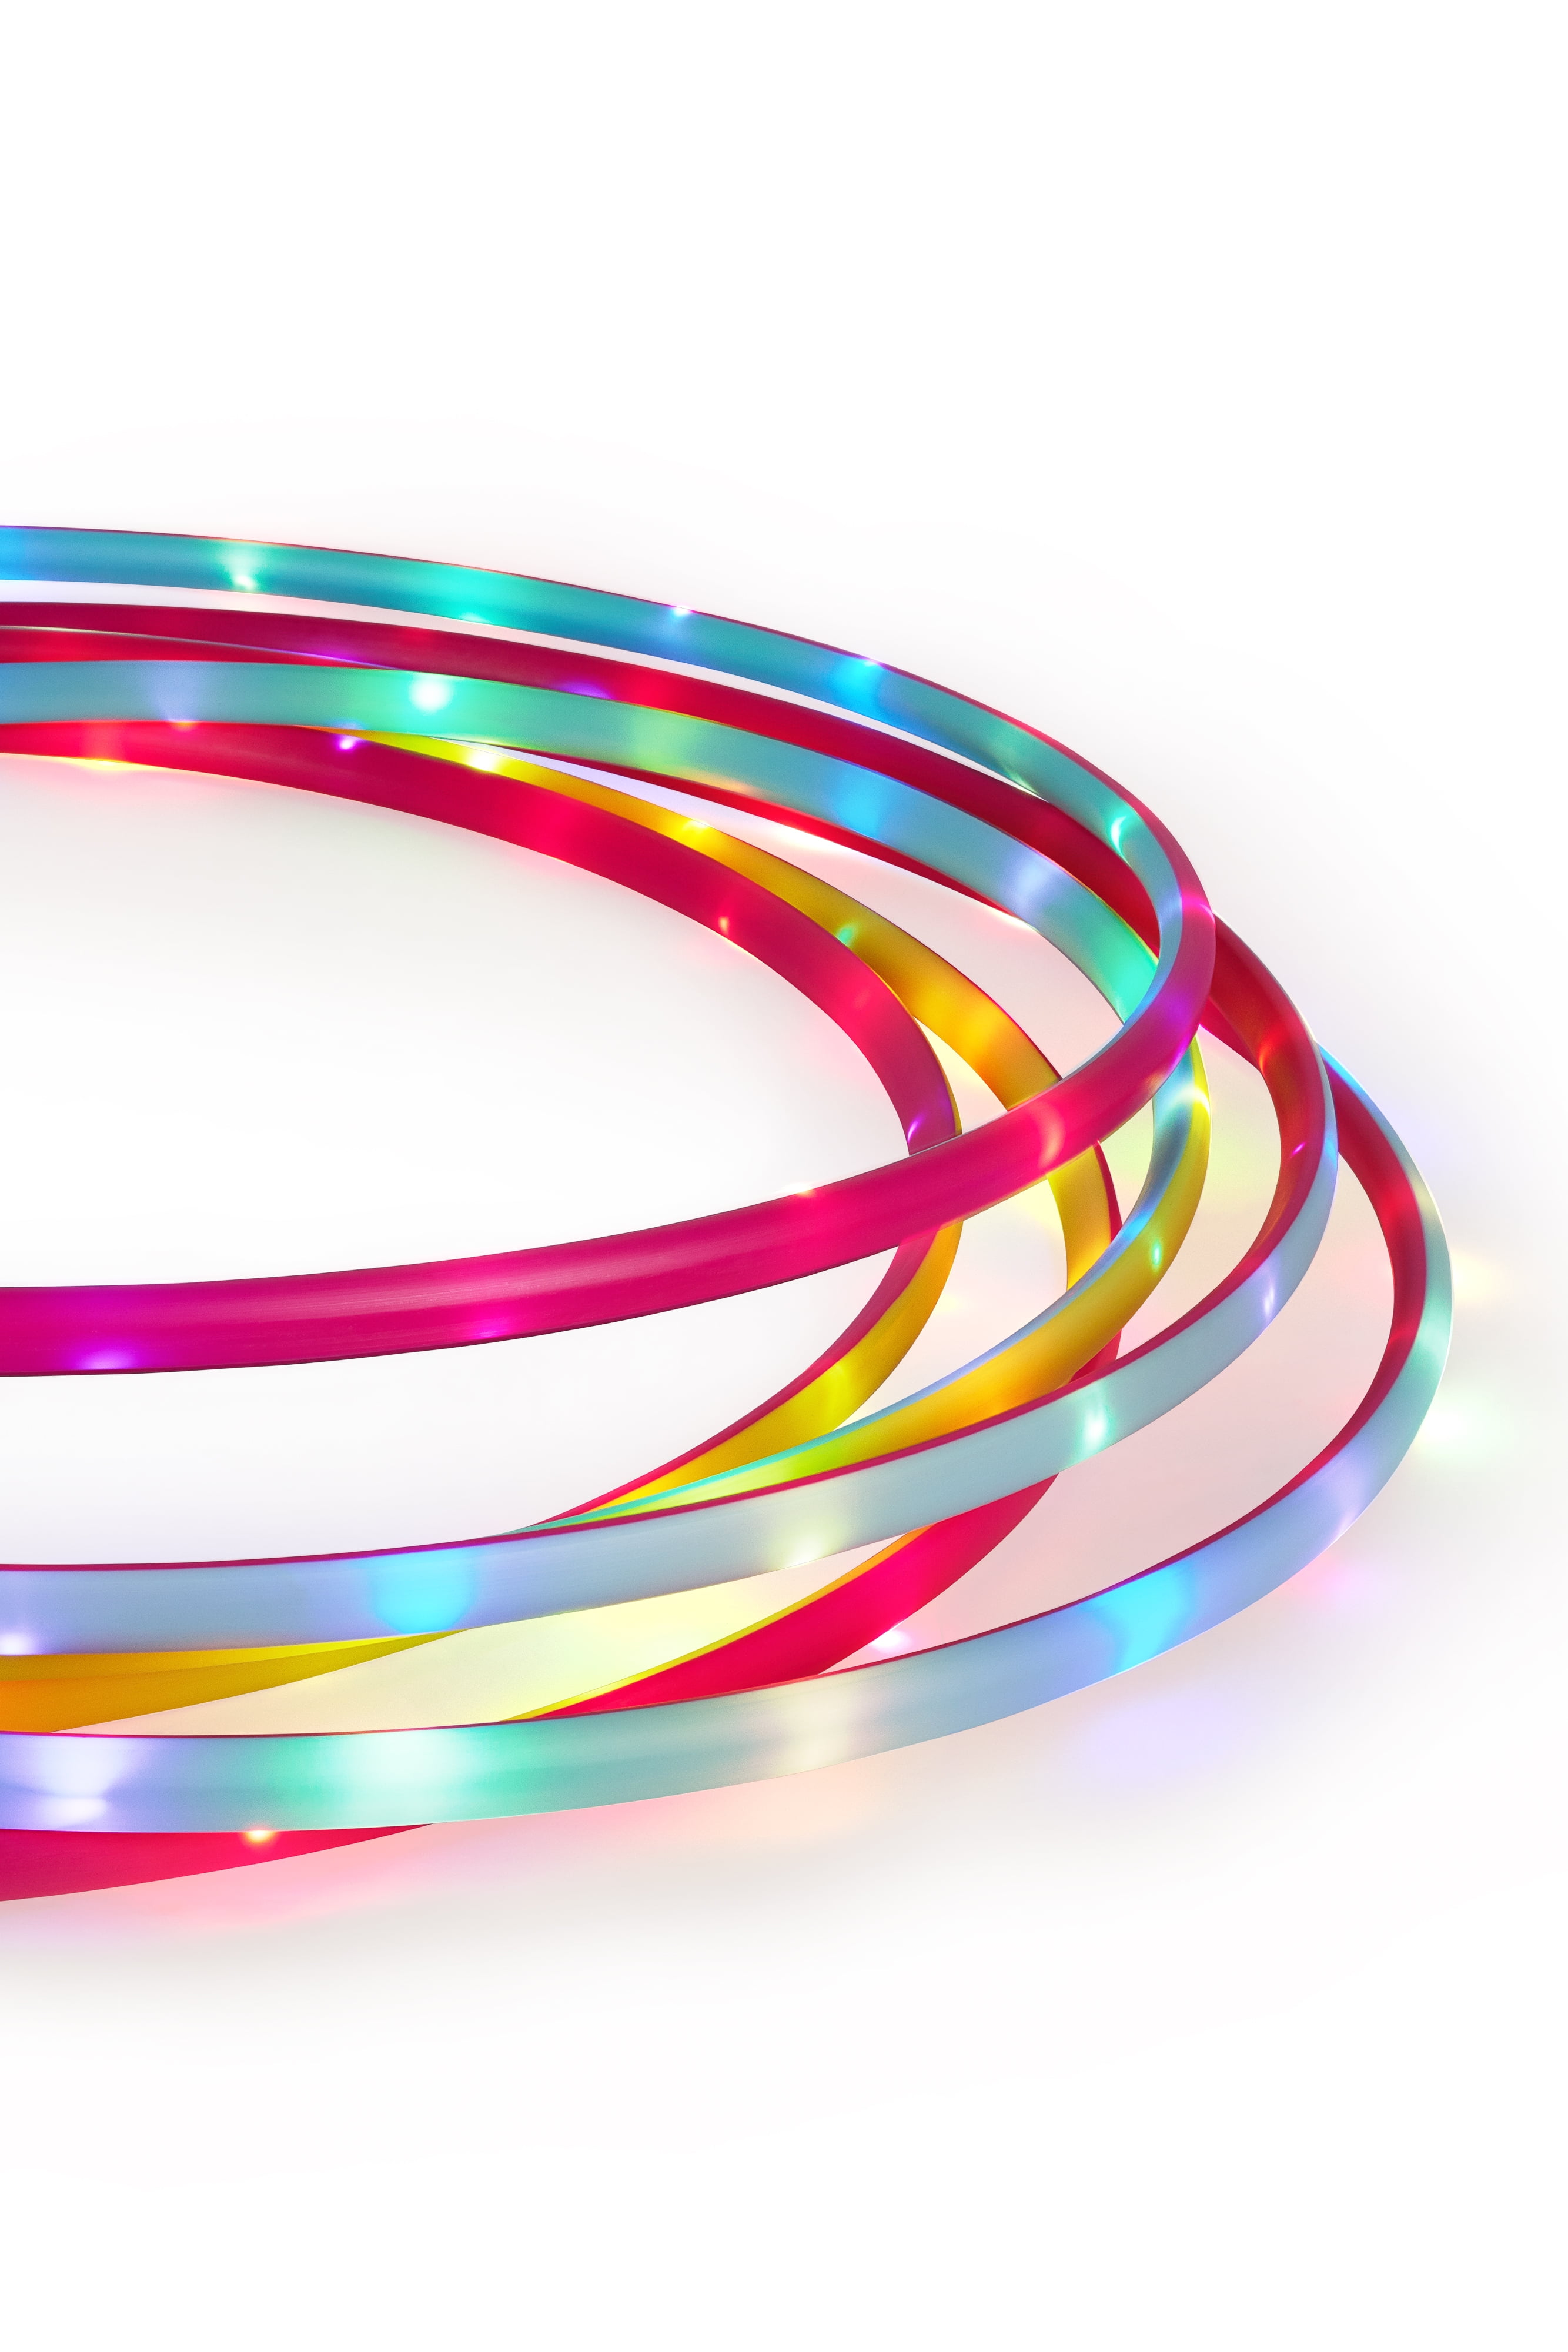 Led Luminous Sports Ring Detachable Performance Hula Hoop Colorful